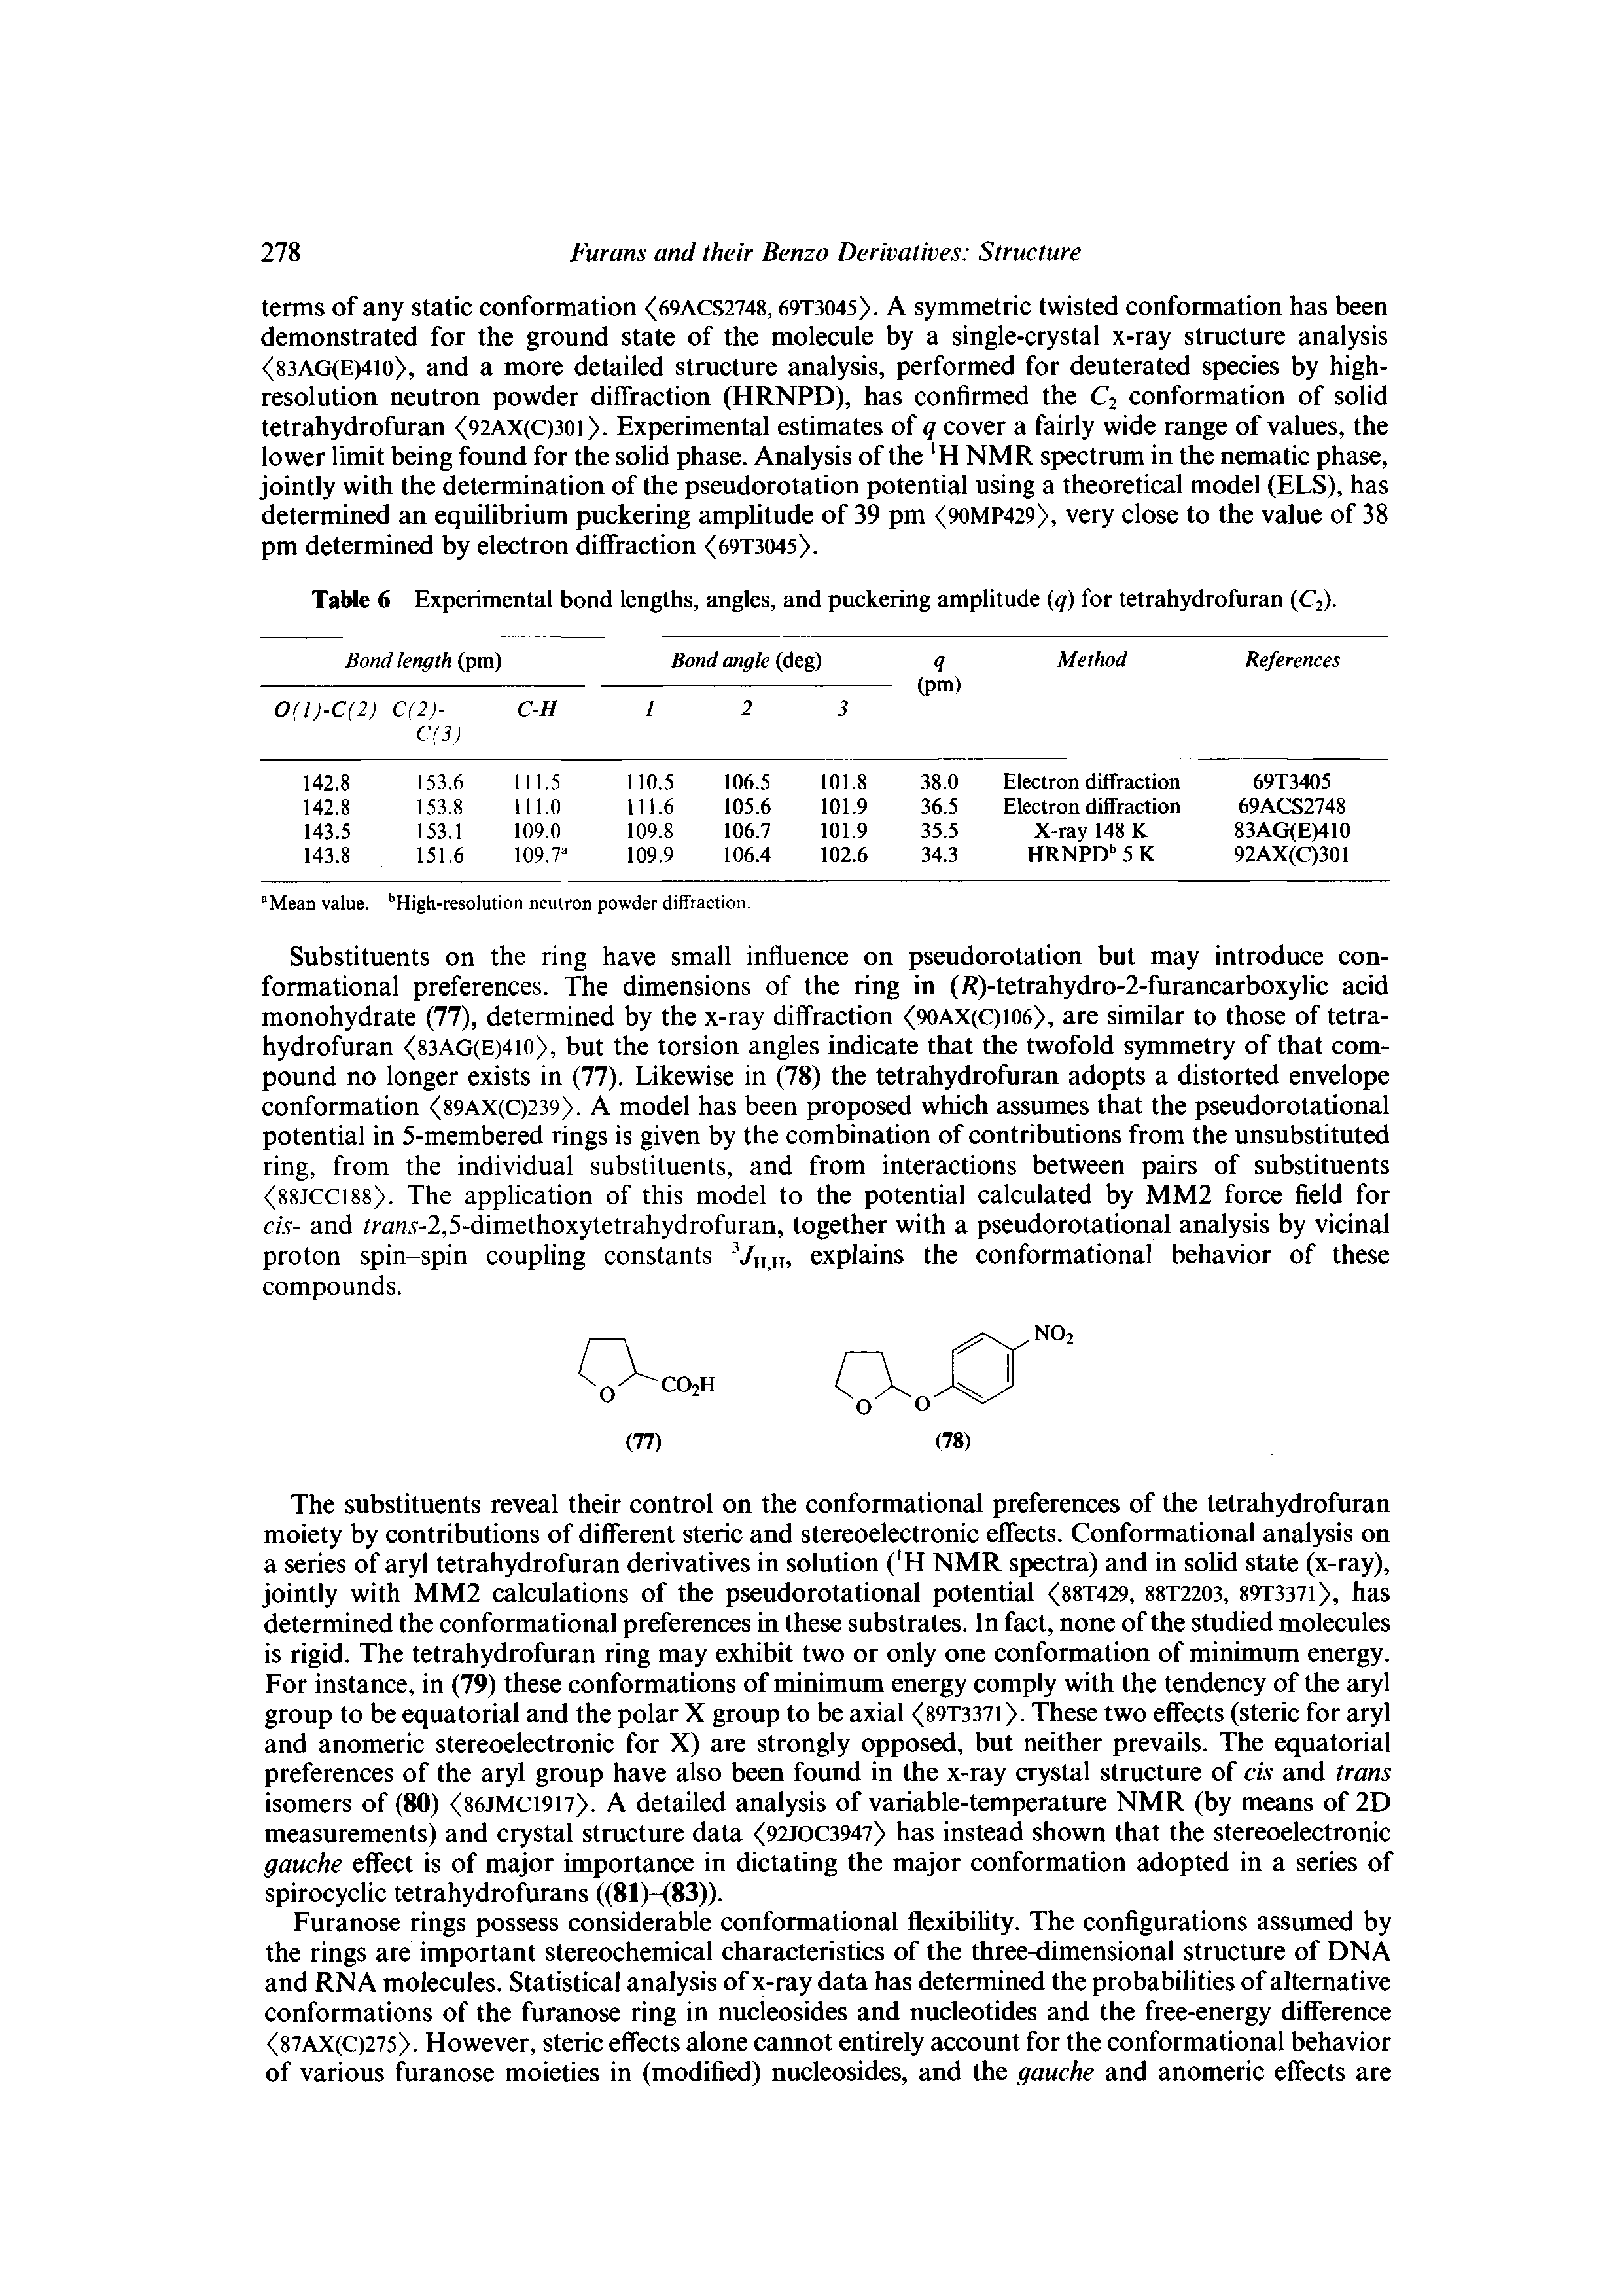 Table 6 Experimental bond lengths, angles, and puckering amplitude q) for tetrahydrofuran (C2).